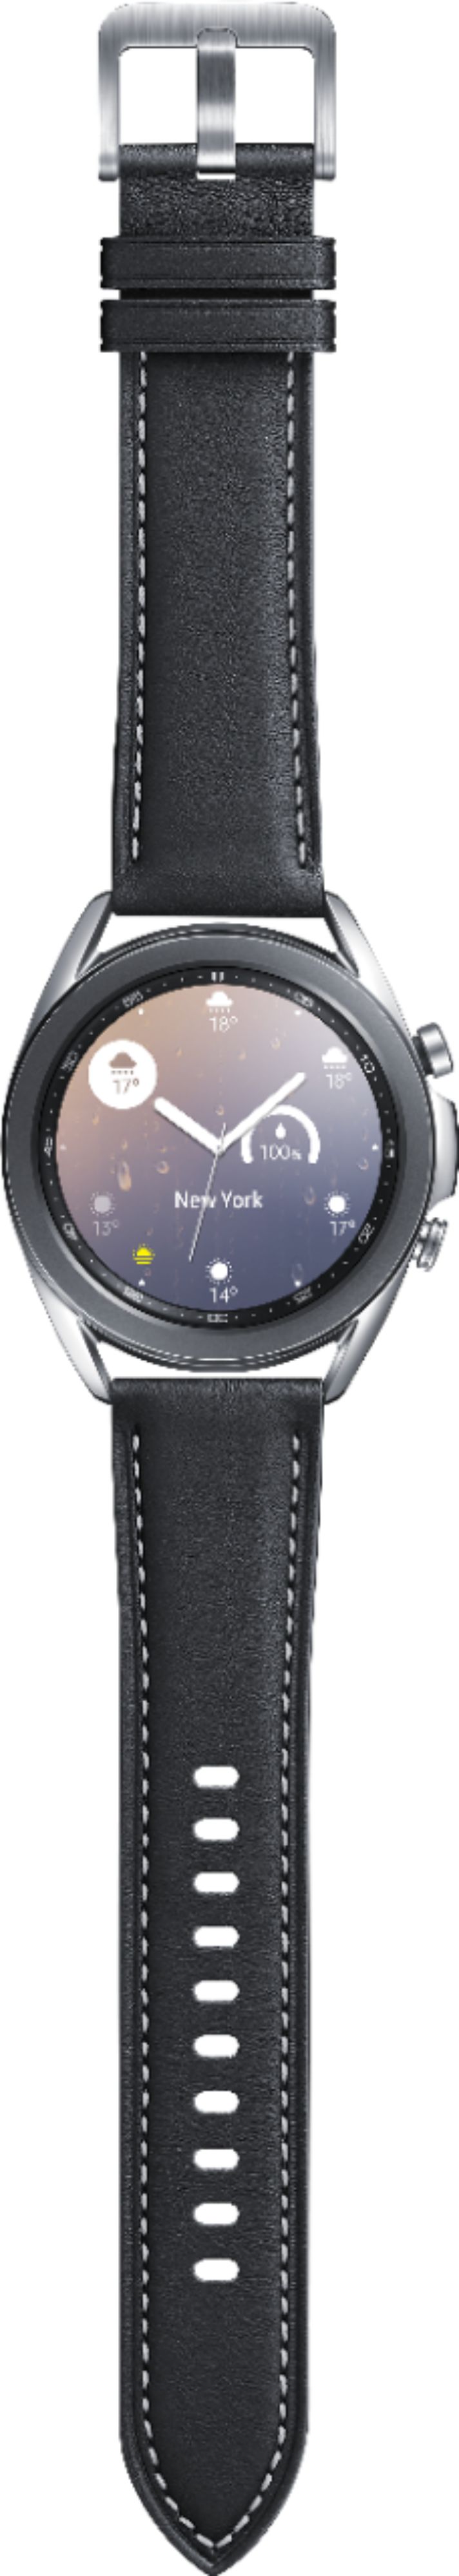 SAMSUNG Galaxy Watch 3 41mm Mystic Bronze BT - SM-R850NZDAXAR 